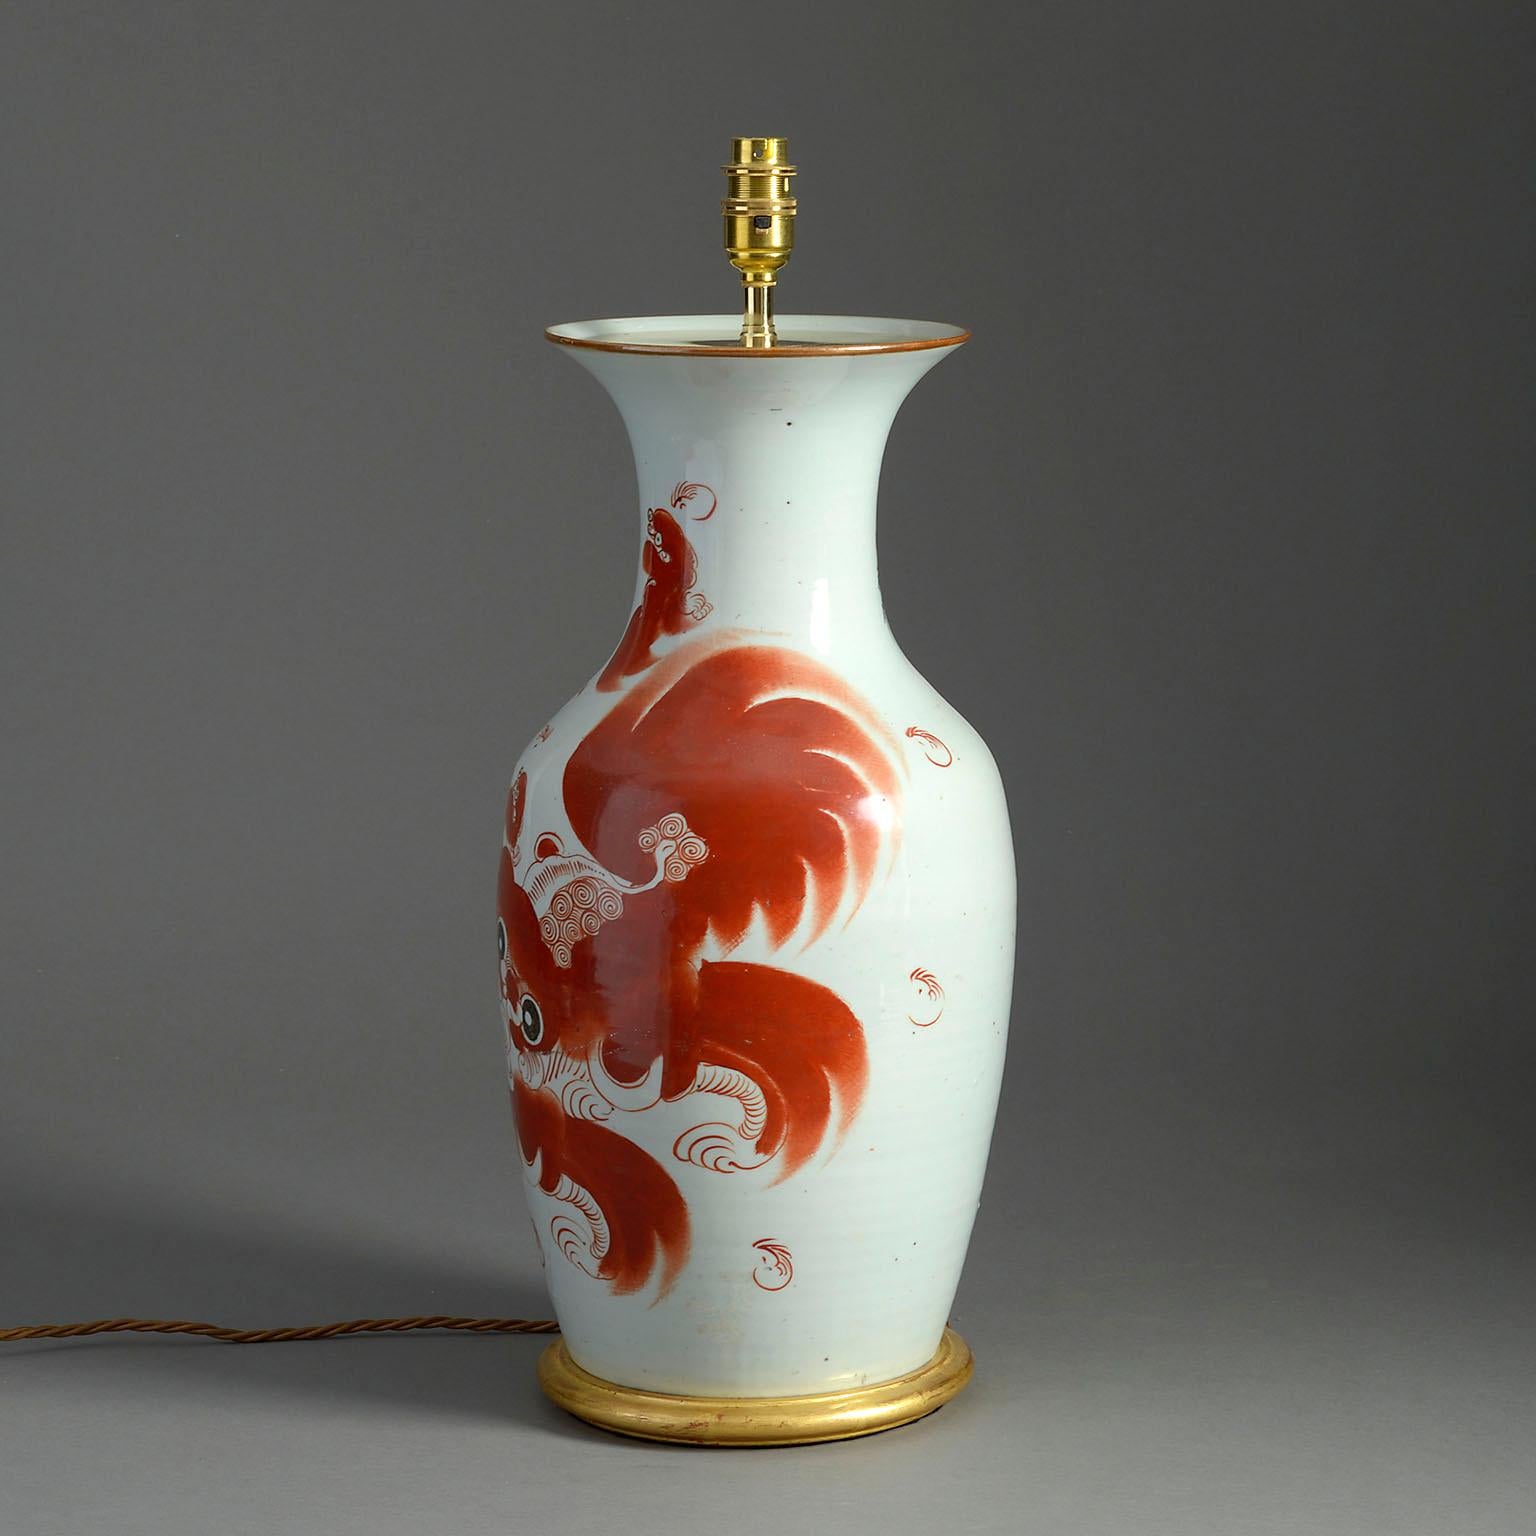 Dog of Foo-Porzellan-Vasenlampe, 20. Jahrhundert (Chinesischer Export)